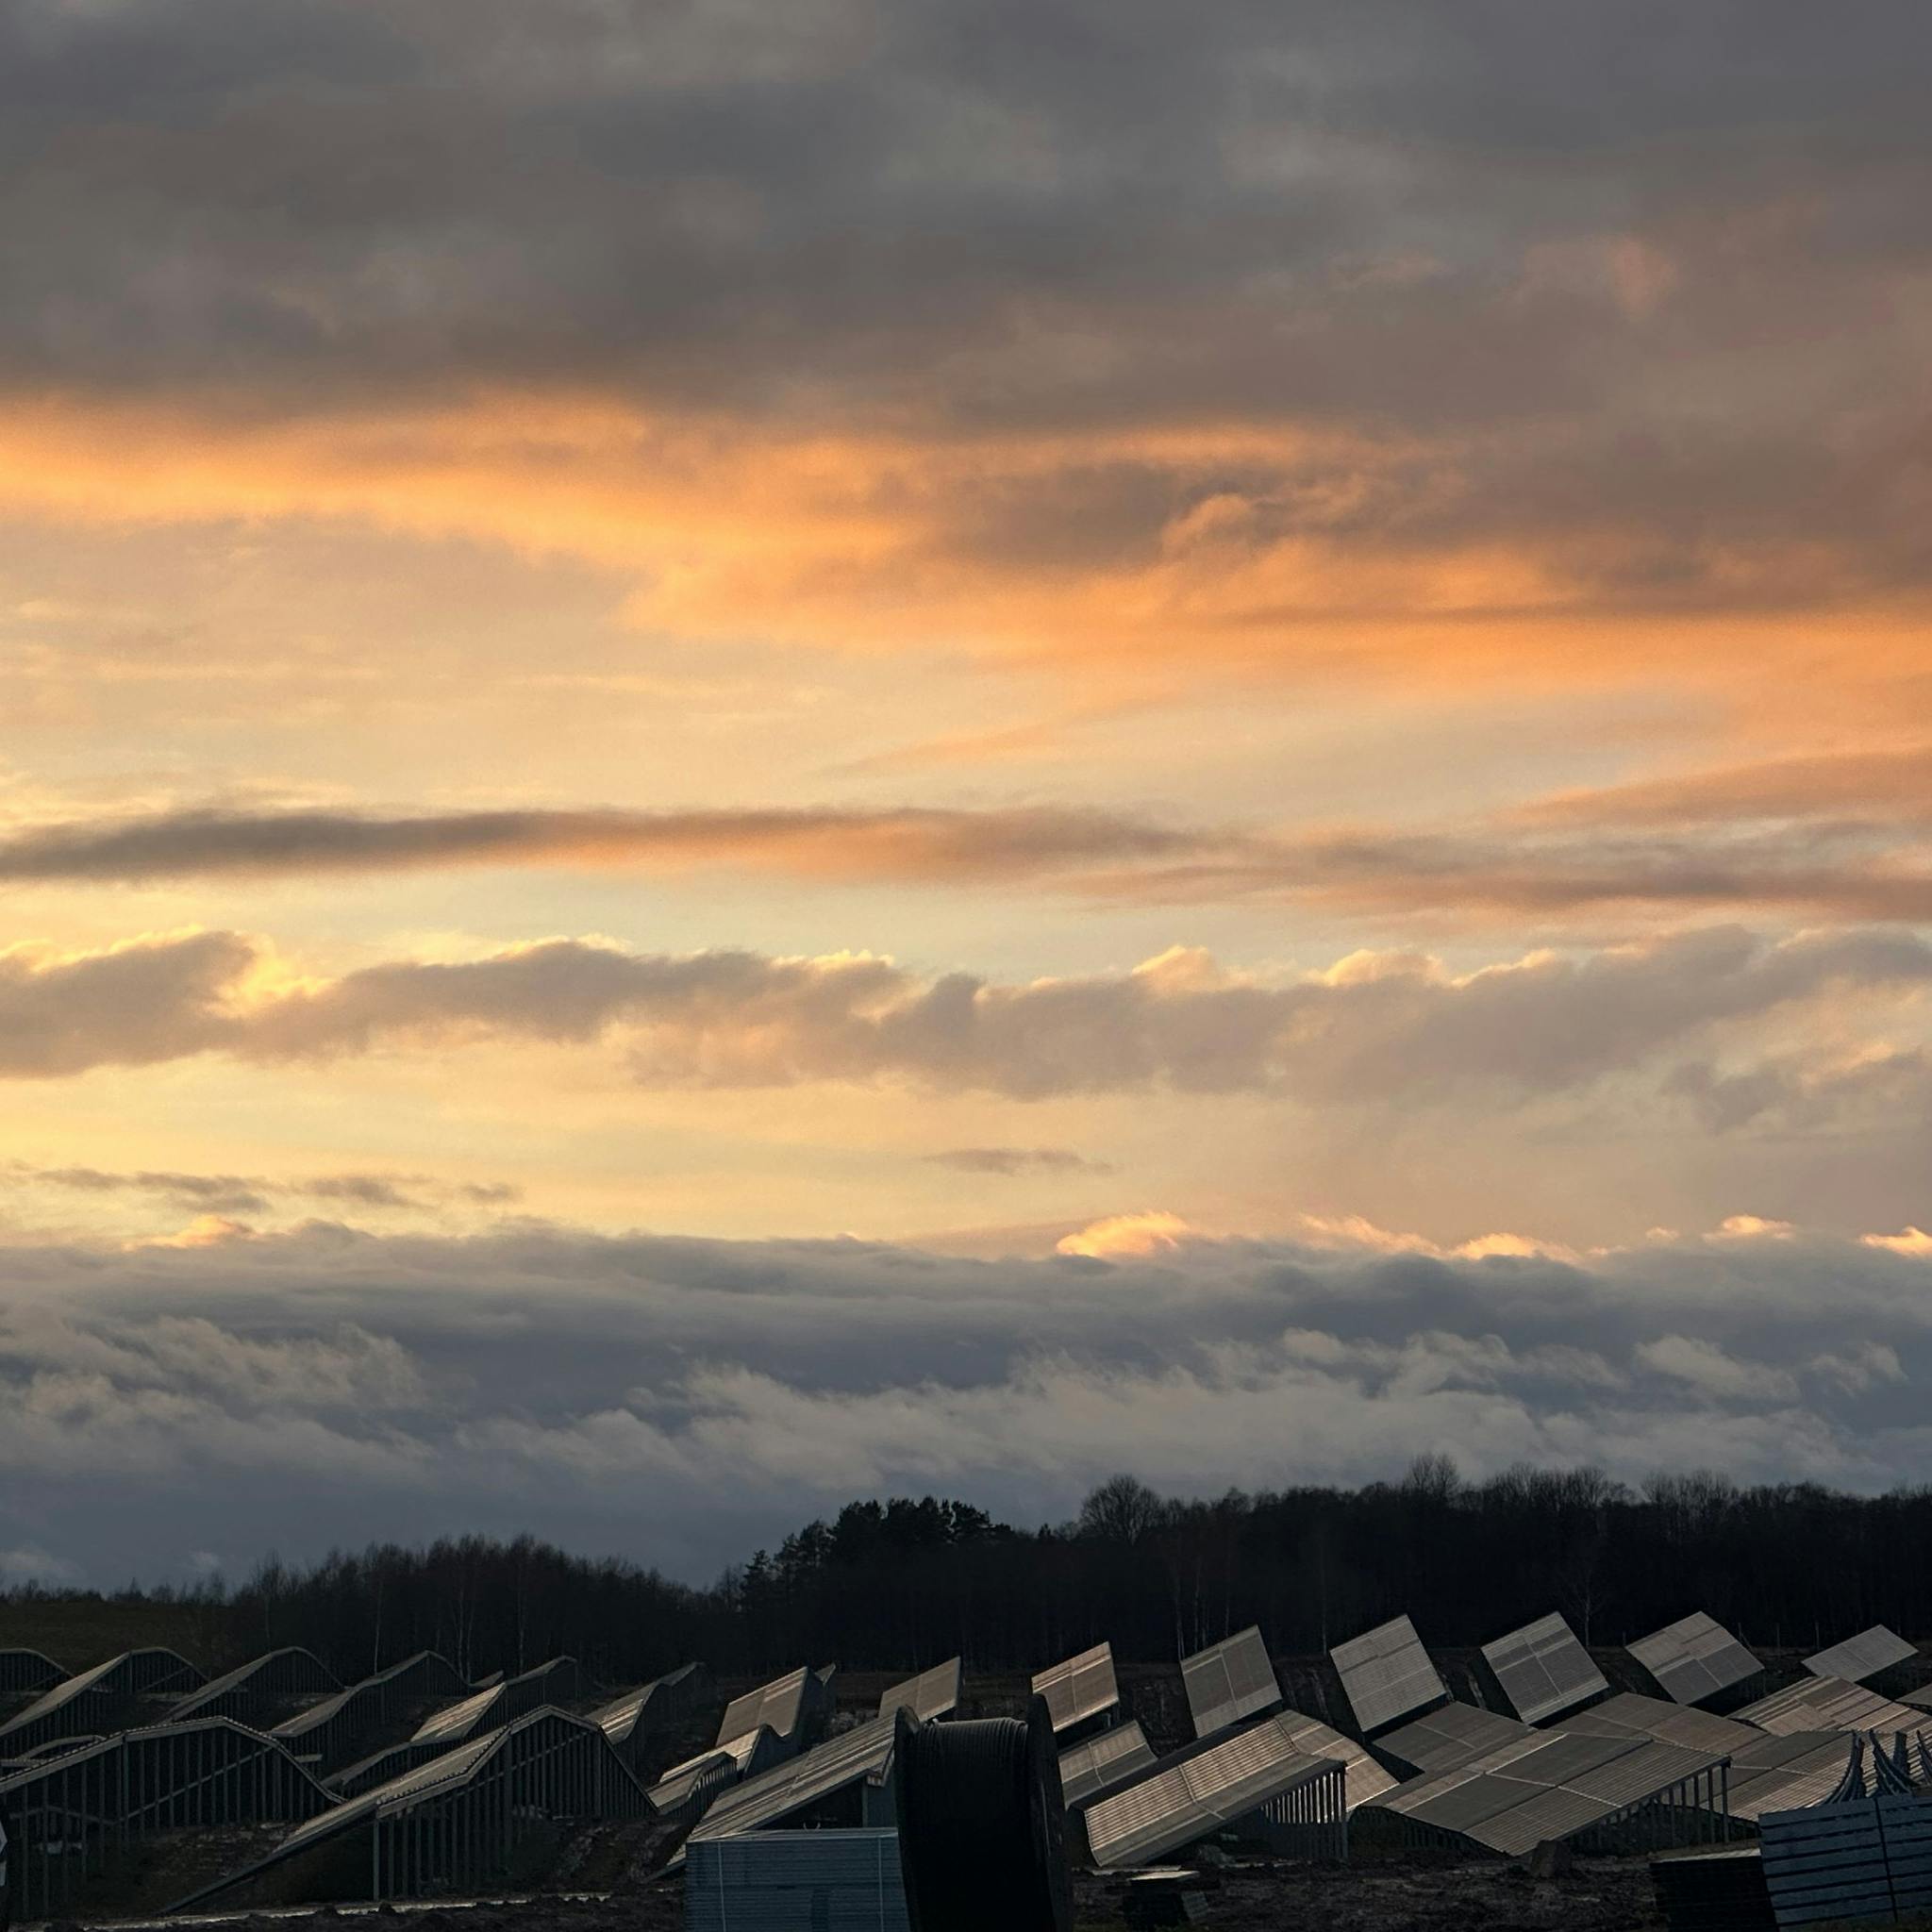 Nordic Solar's Moletai solar park in Lithuania